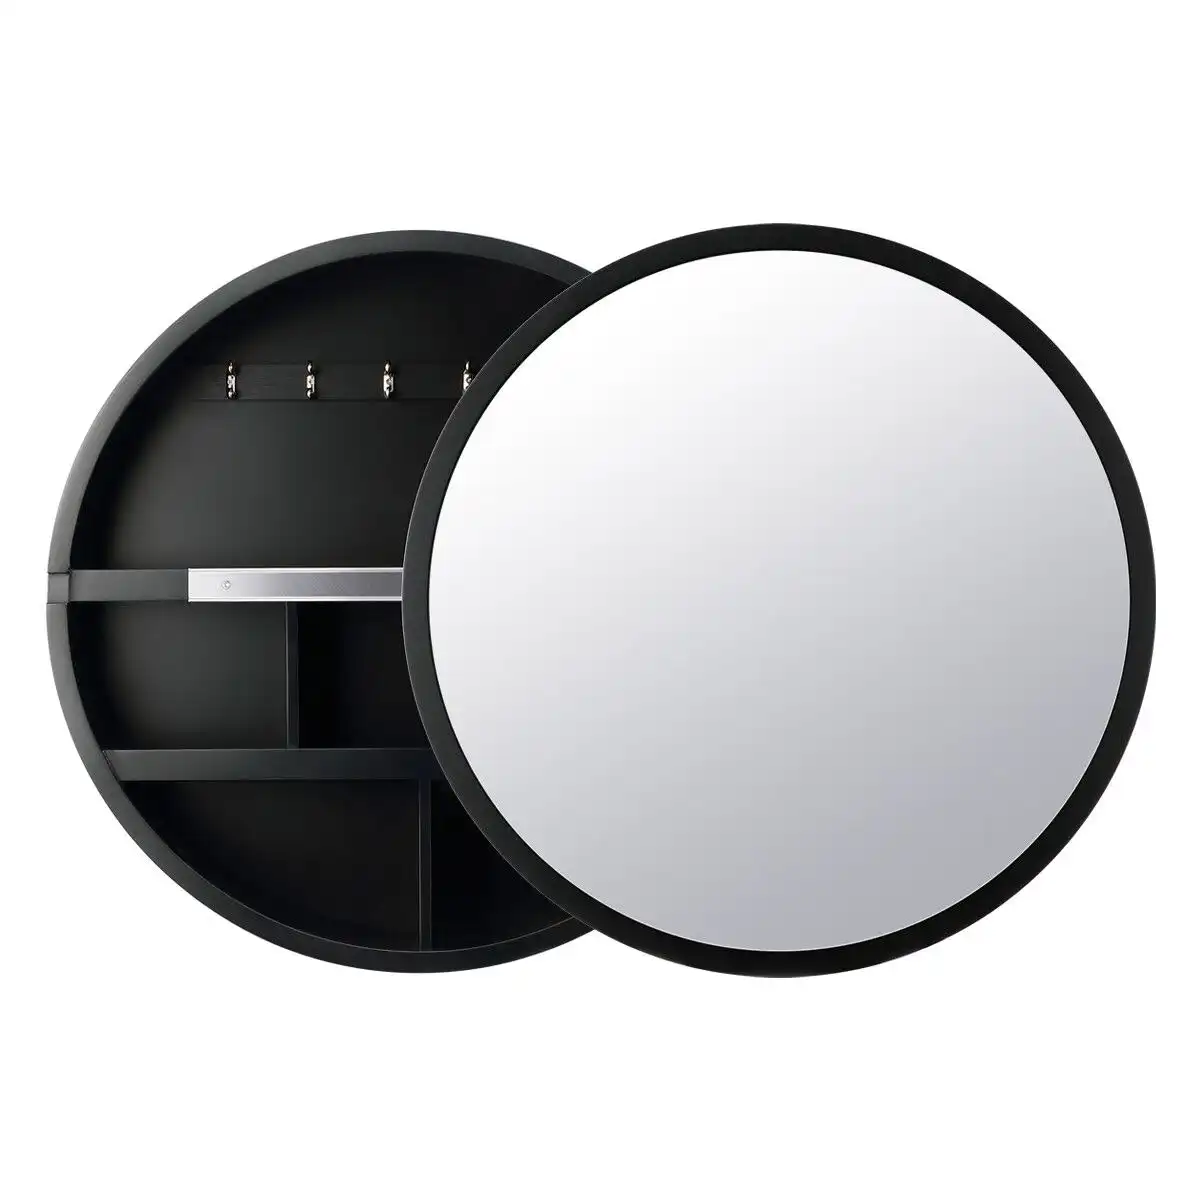 Ausway Bathroom Mirror Cabinet Medicine Vanity Round Wall Mirrored Cupboard with Storage Sliding Door Black 60cm Diameter